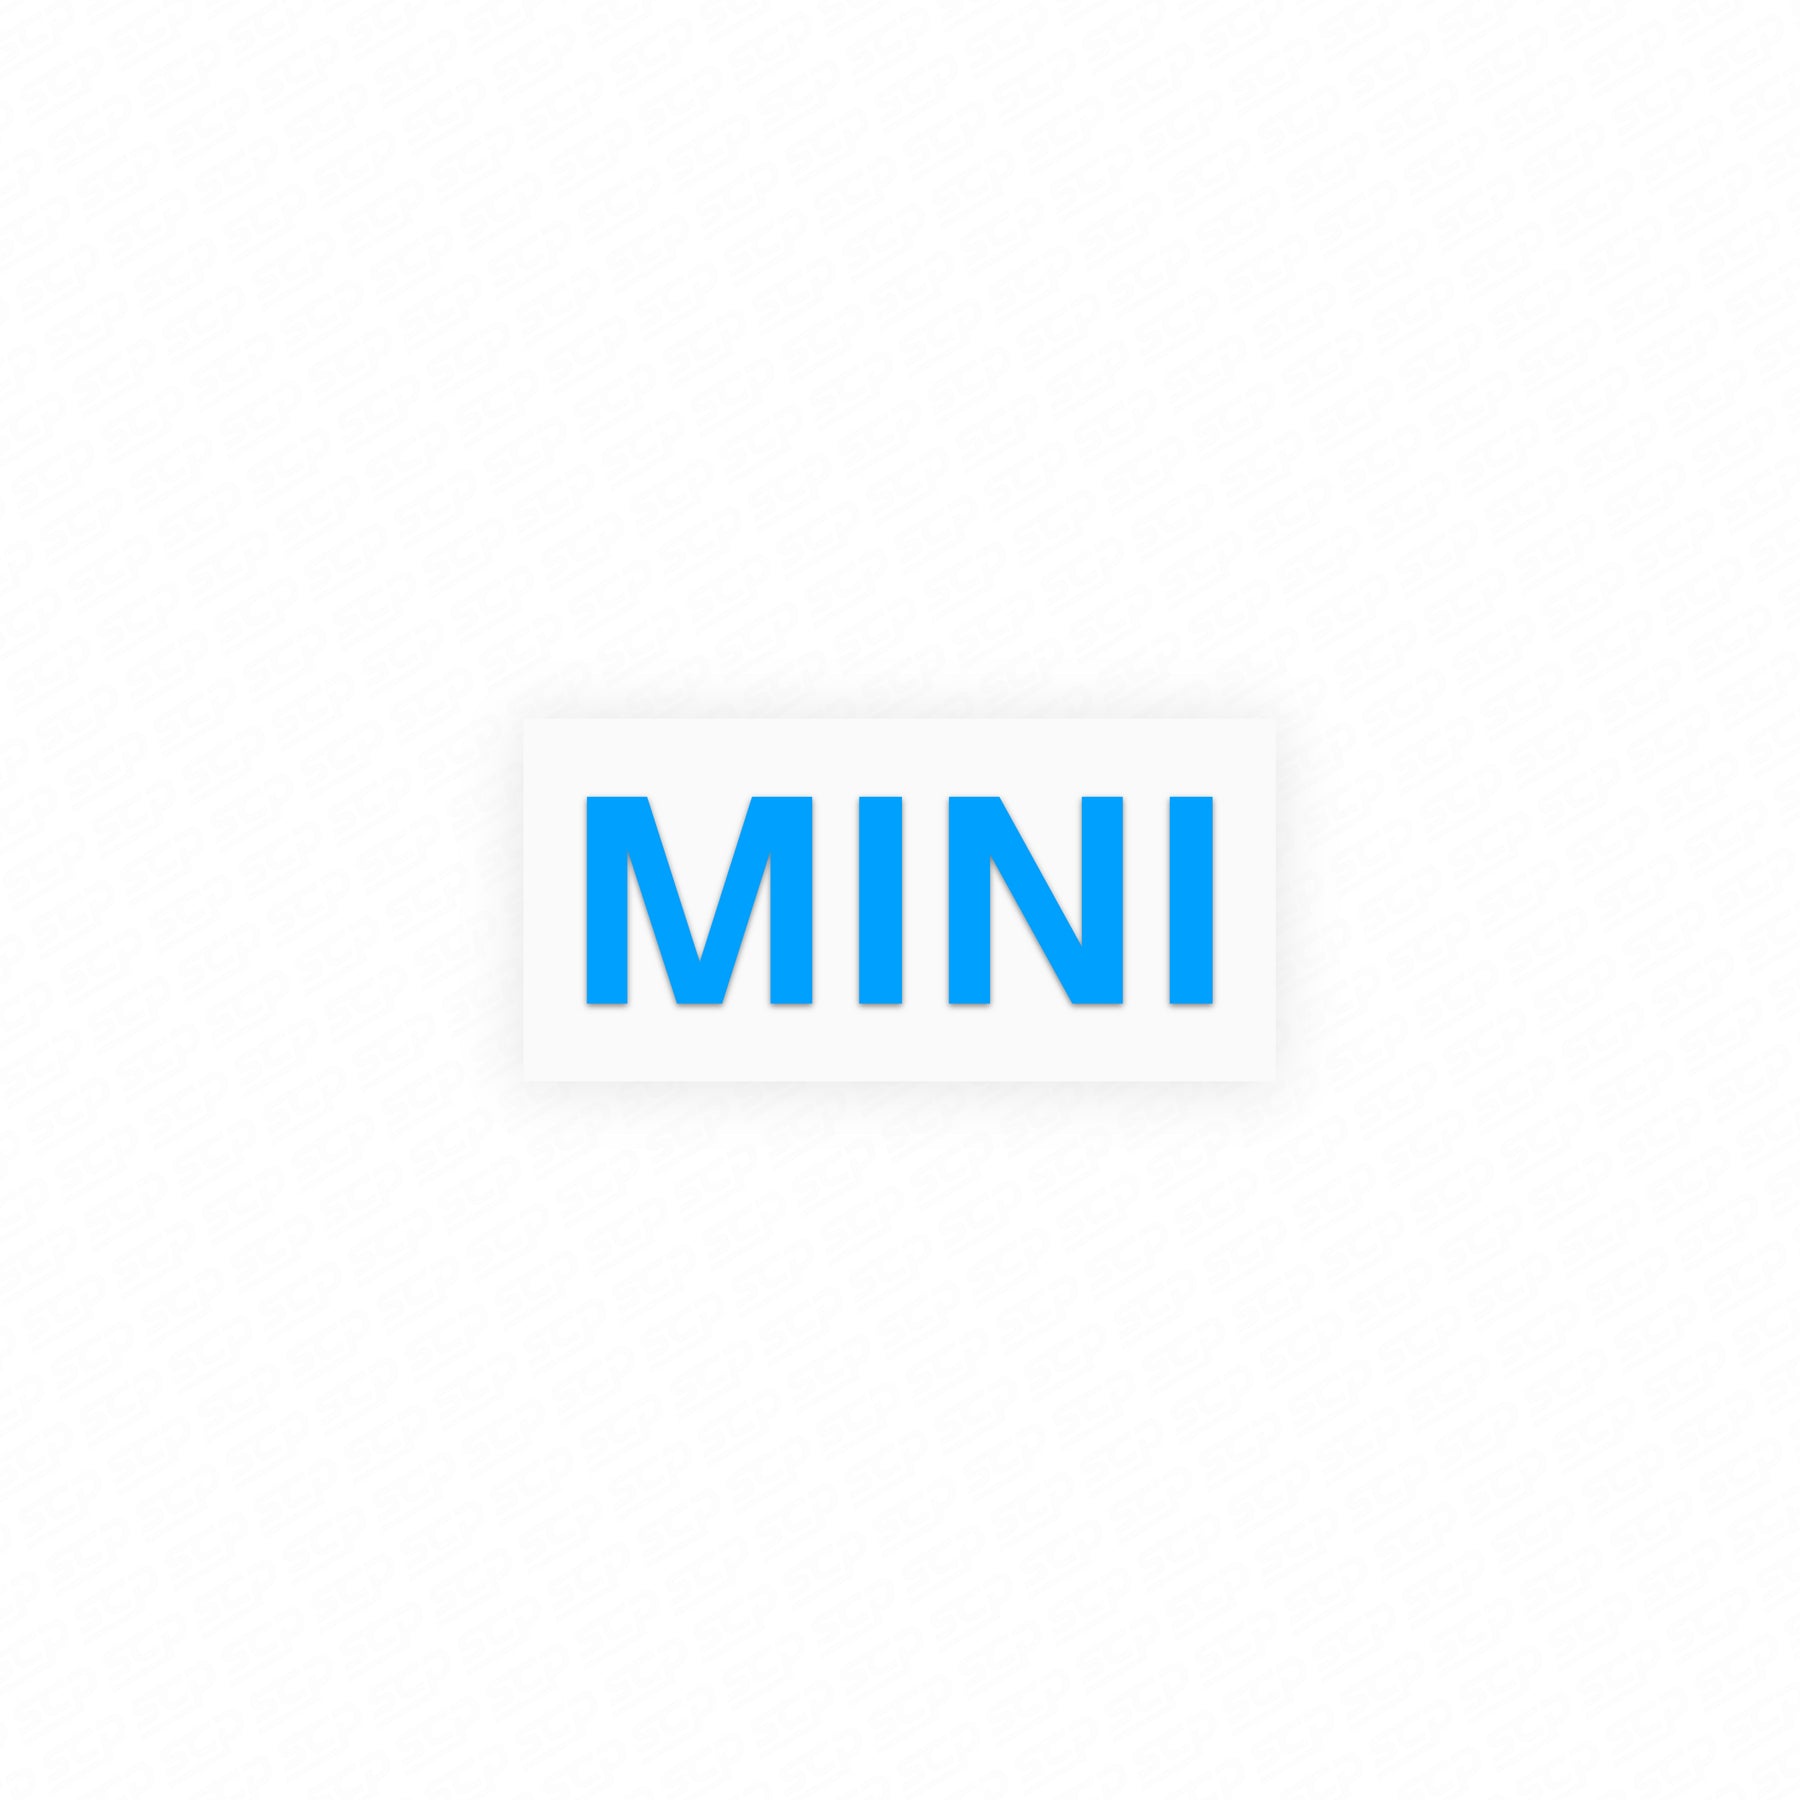 MINI F-Series Pre-LCI Engine Bay Cover Lettering Decal